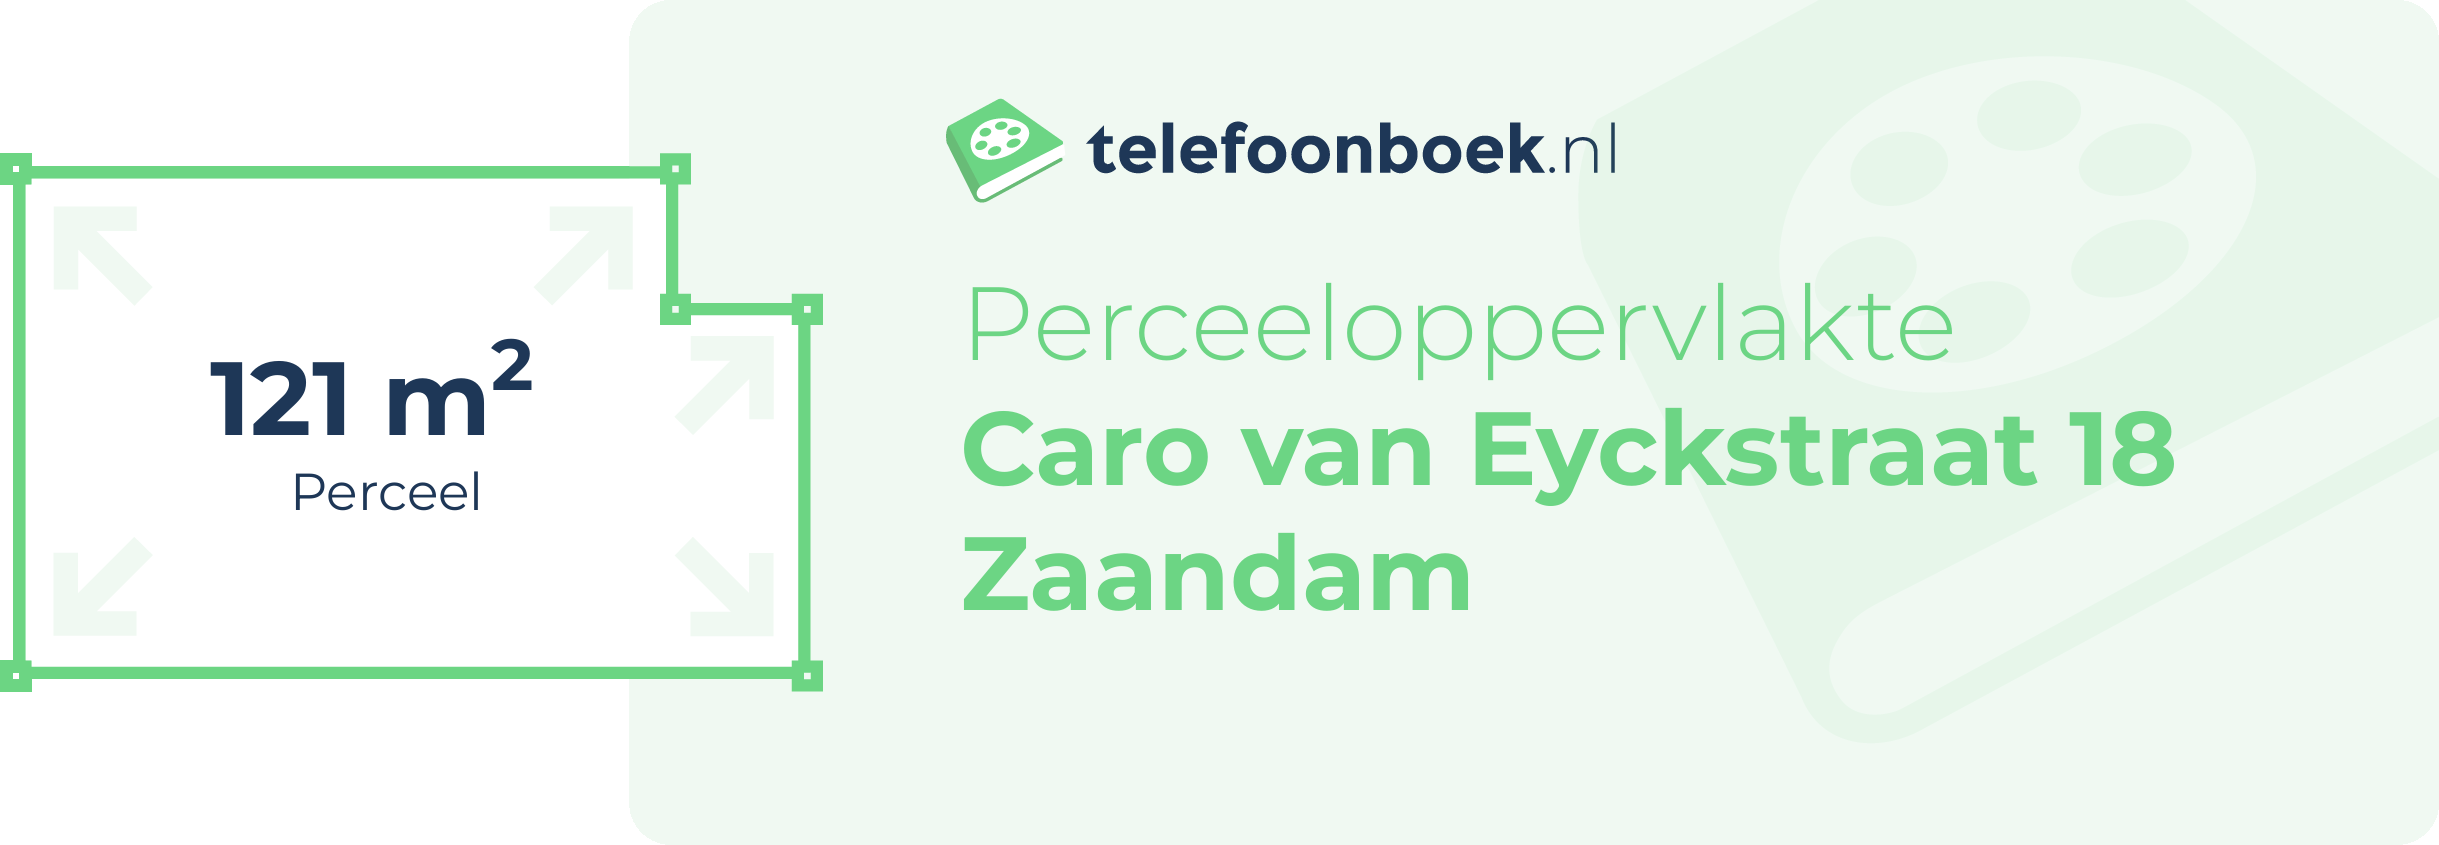 Perceeloppervlakte Caro Van Eyckstraat 18 Zaandam